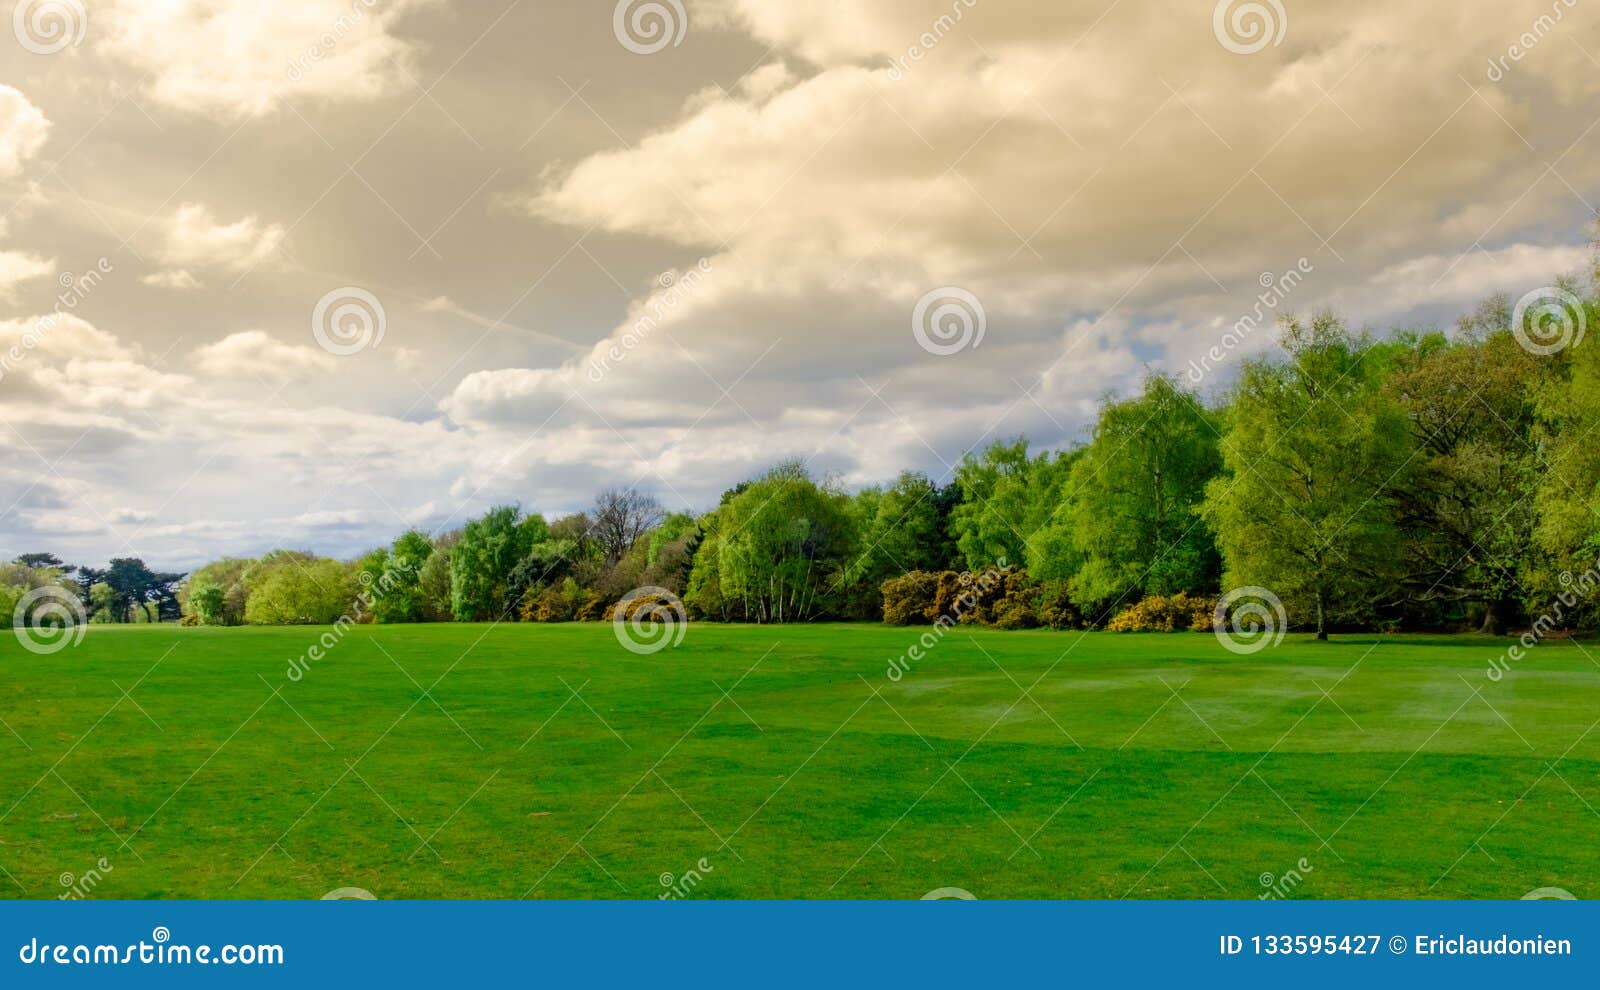 wimbledon common-golf course